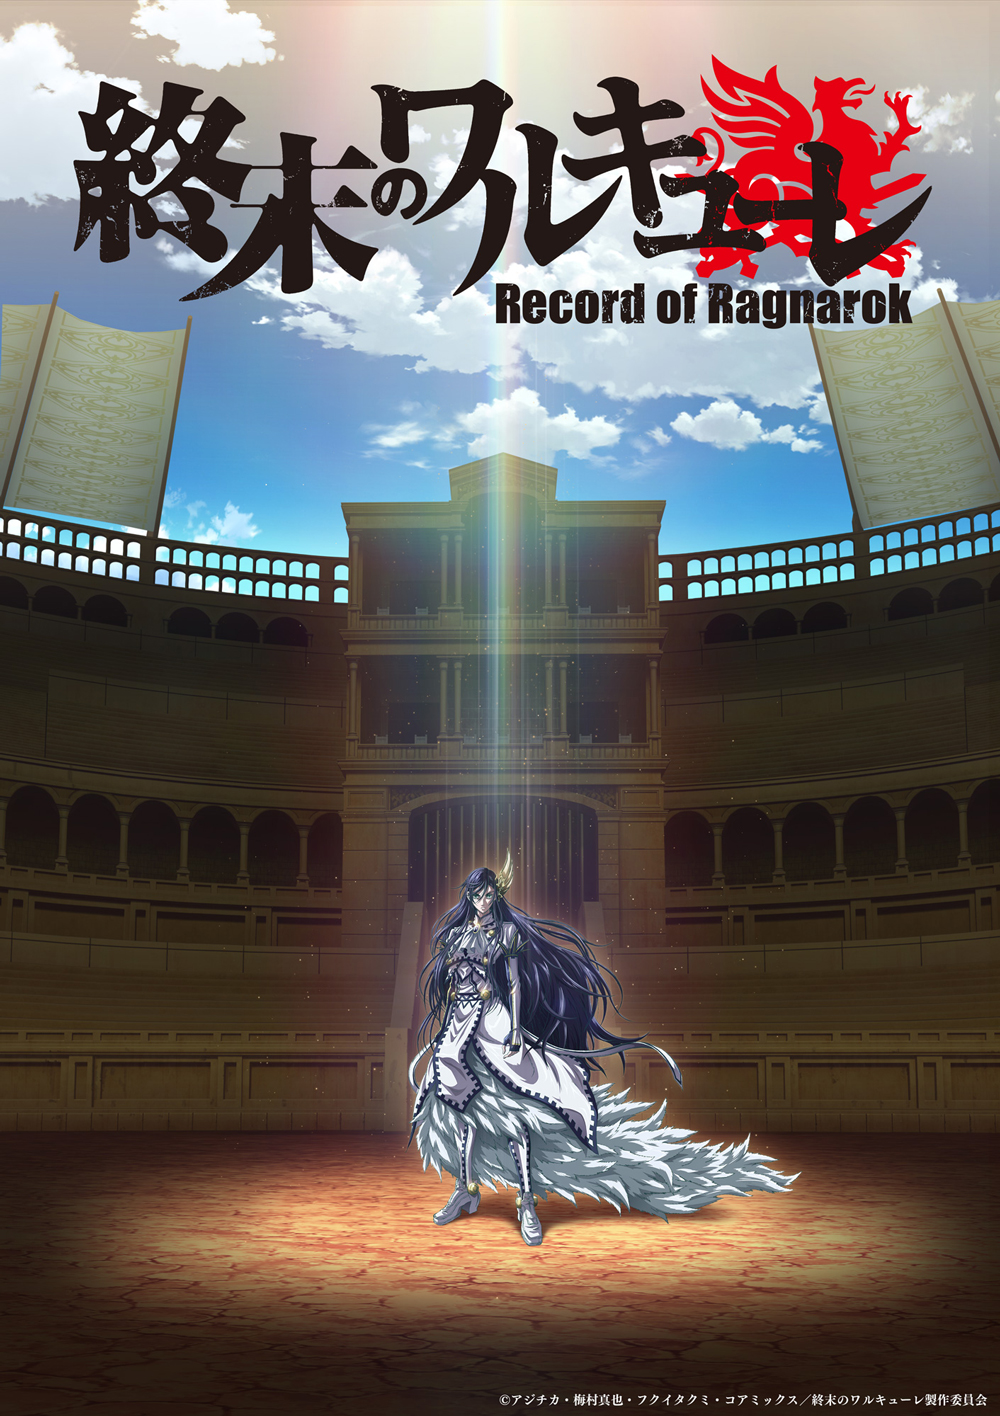 Record of Ragnarok Anime: Release Info